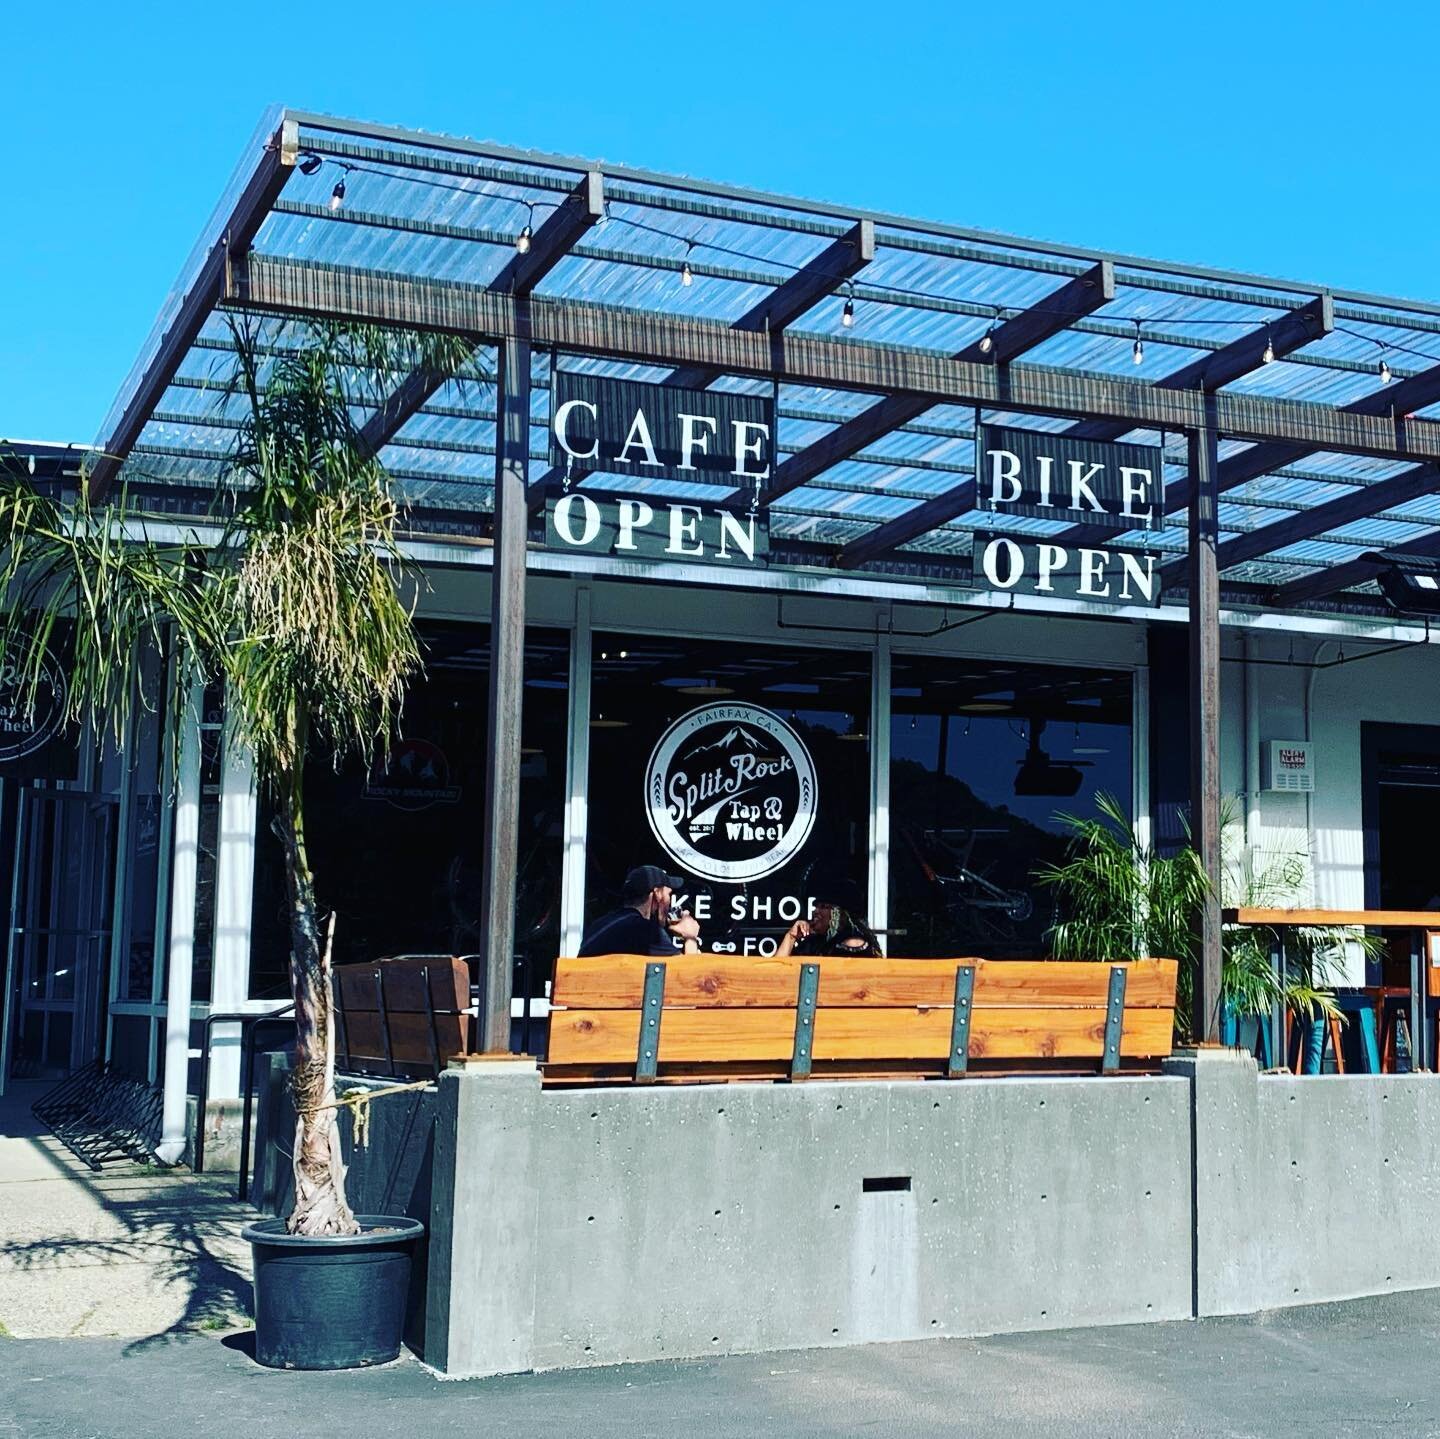 Cafe Open. Bike Open. 👀@splitrock_tap_and_wheel 🚲🍺
.
#fairfaxopenforbusiness #fairfaxweloveyou #fairfaxcalifornia #marincounty #eatlocal #shopfairfaxmarin